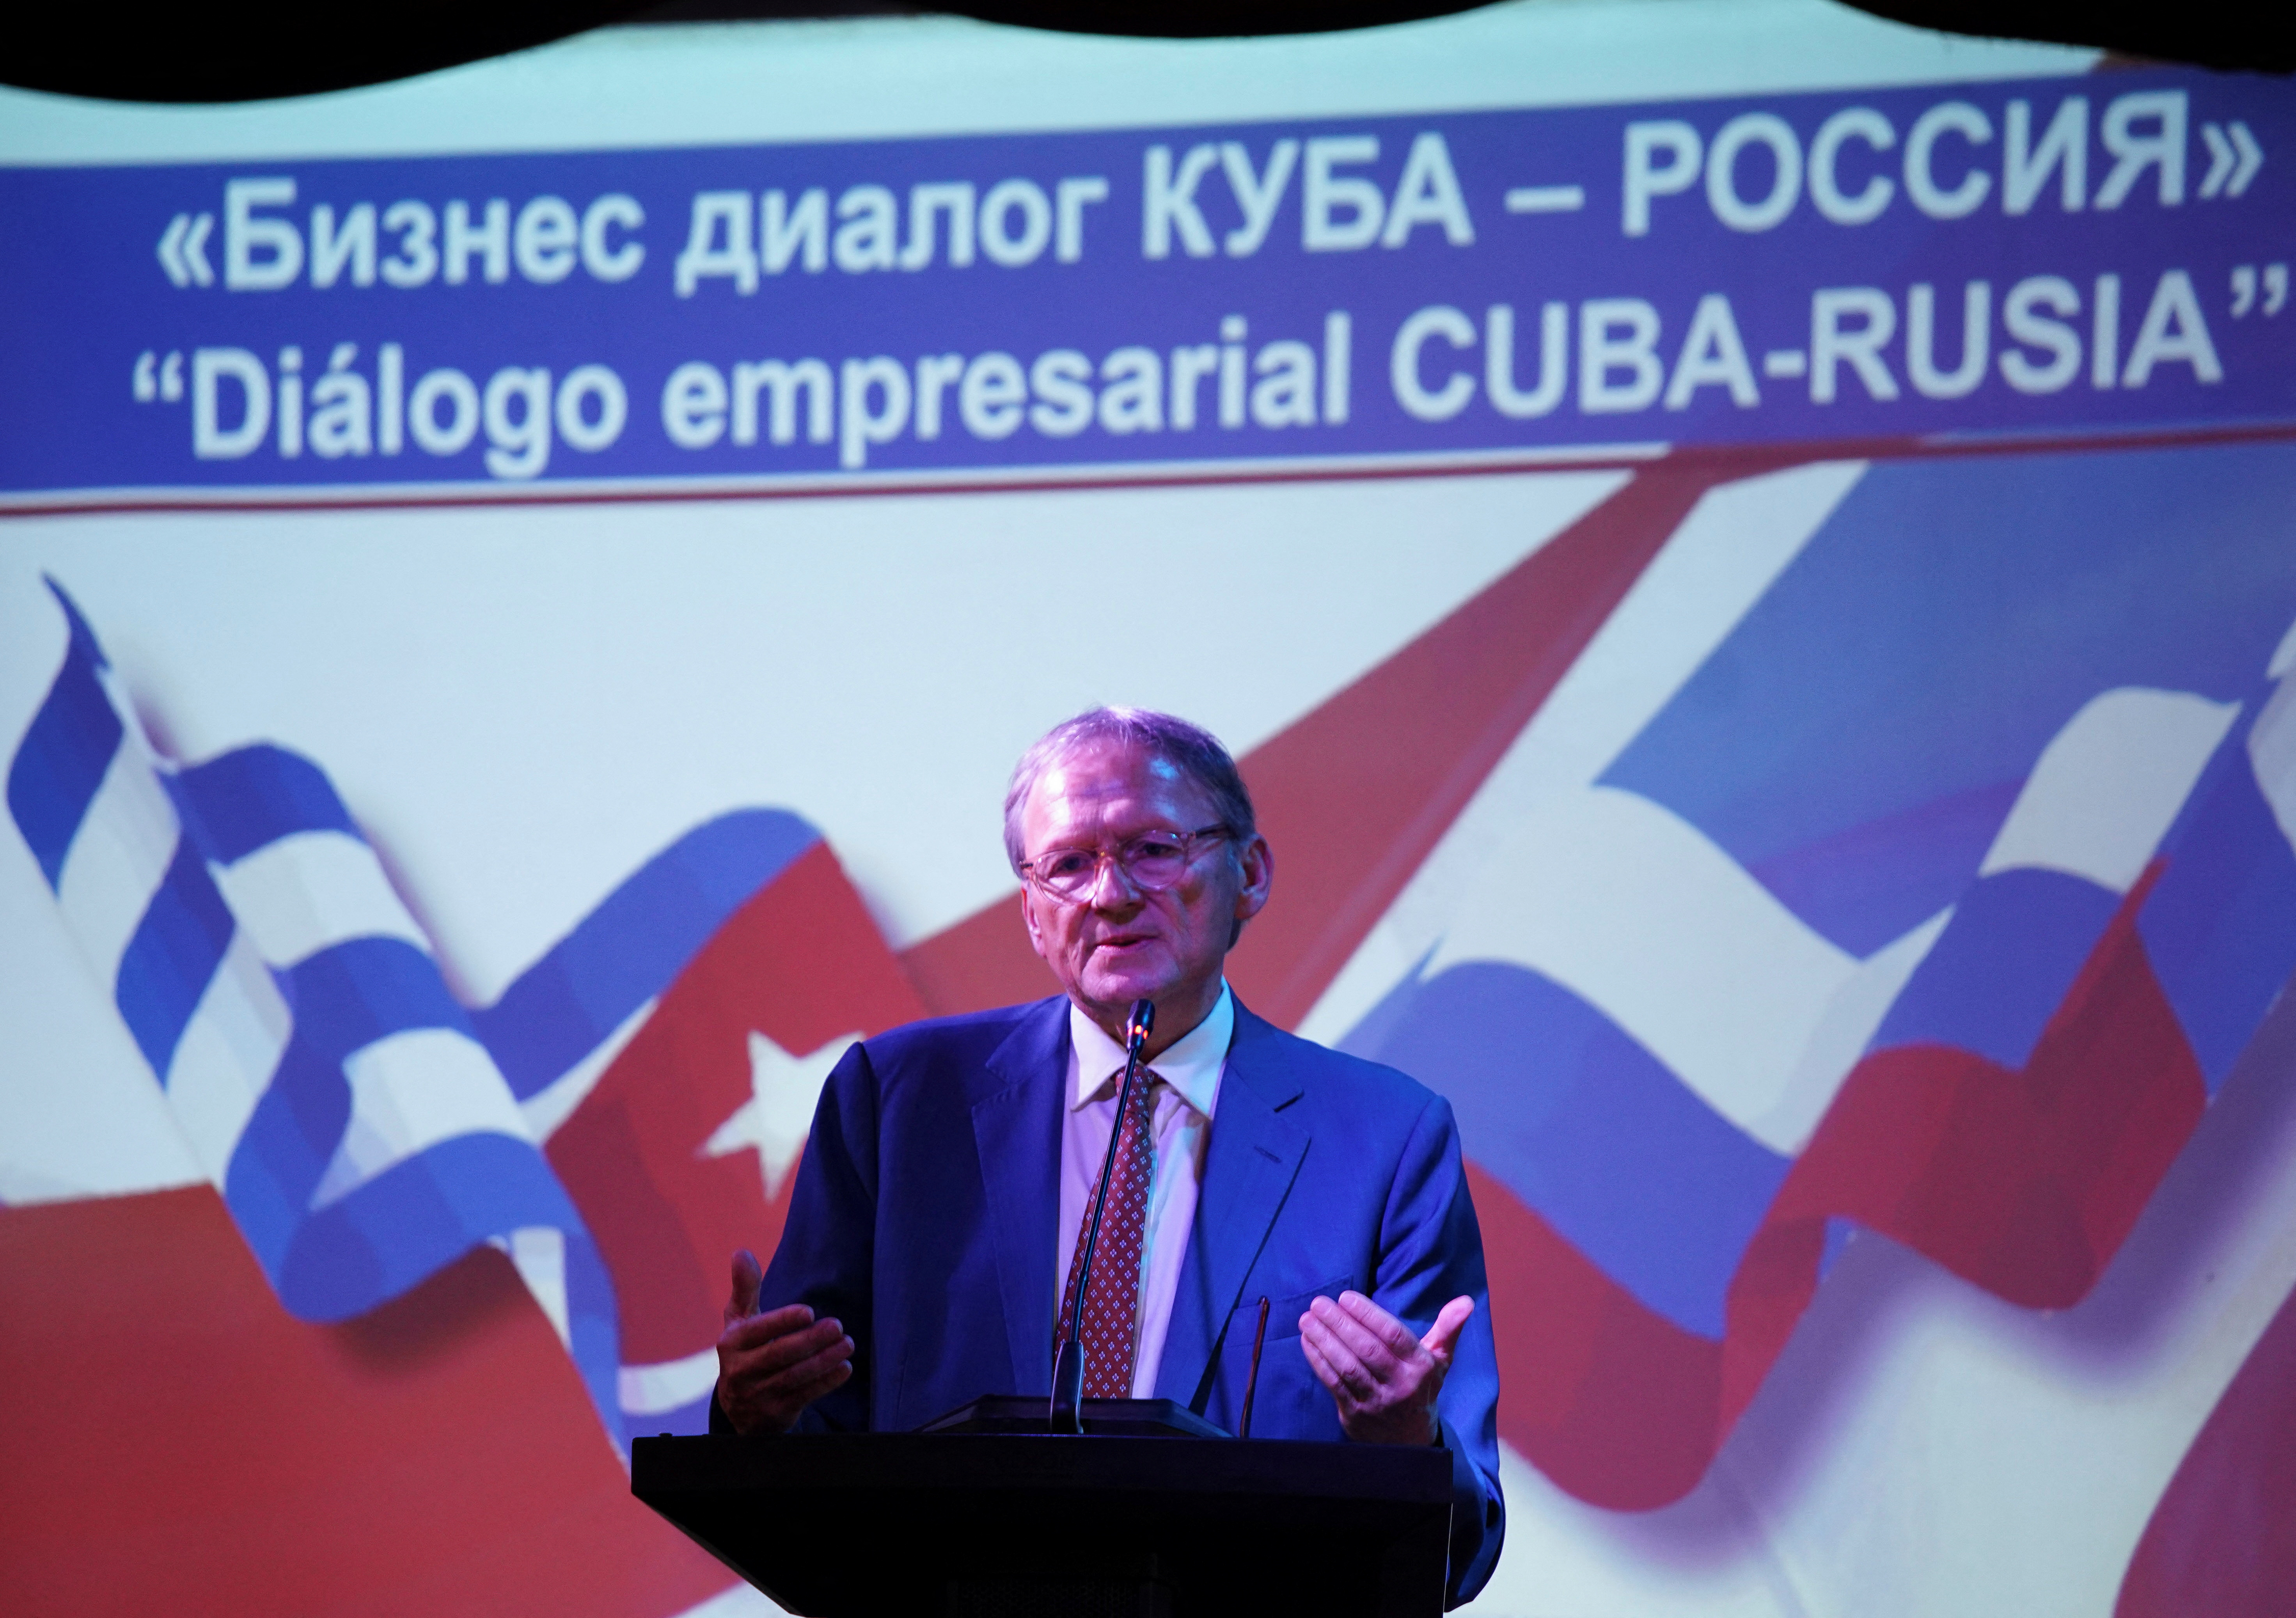 Boris Titov, head of the Russian delegation of the Cuban-Russian Business Committee speaks in Havana